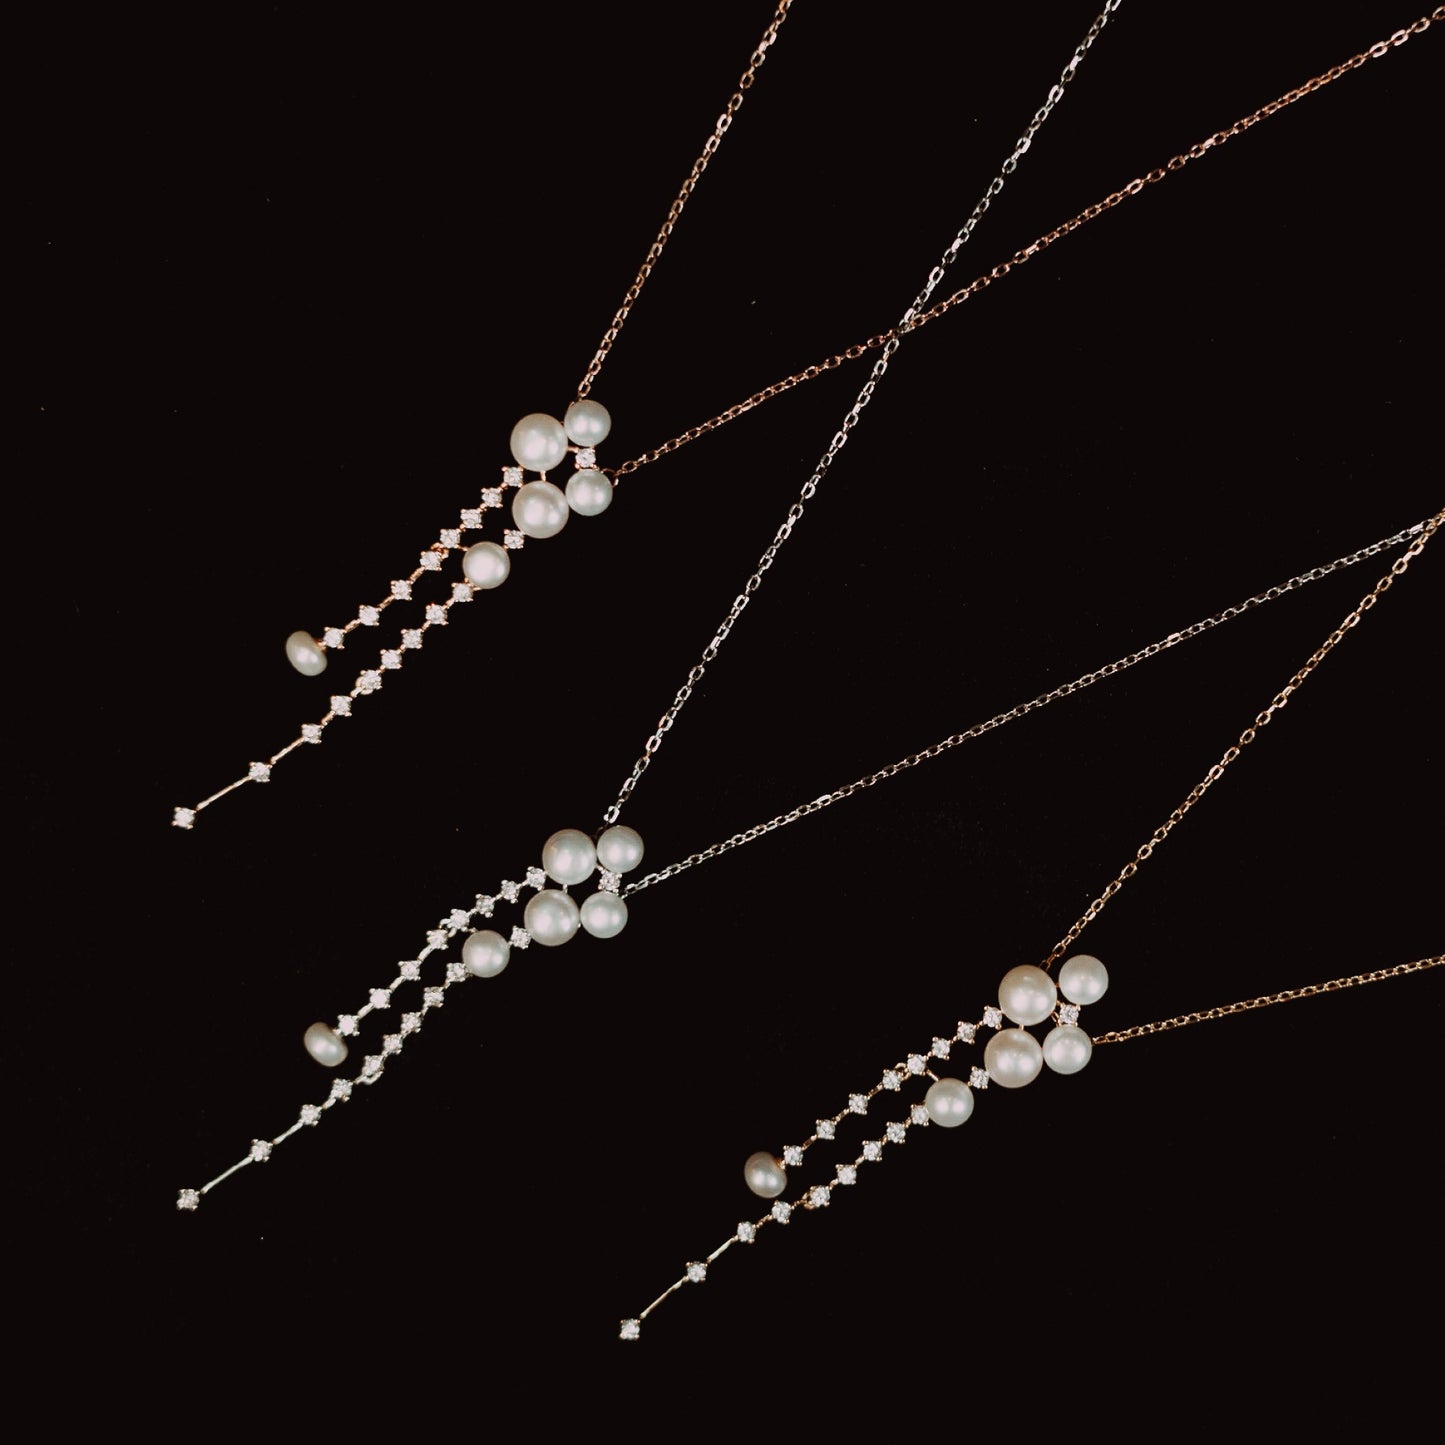 Silver Pearlicious Necklace